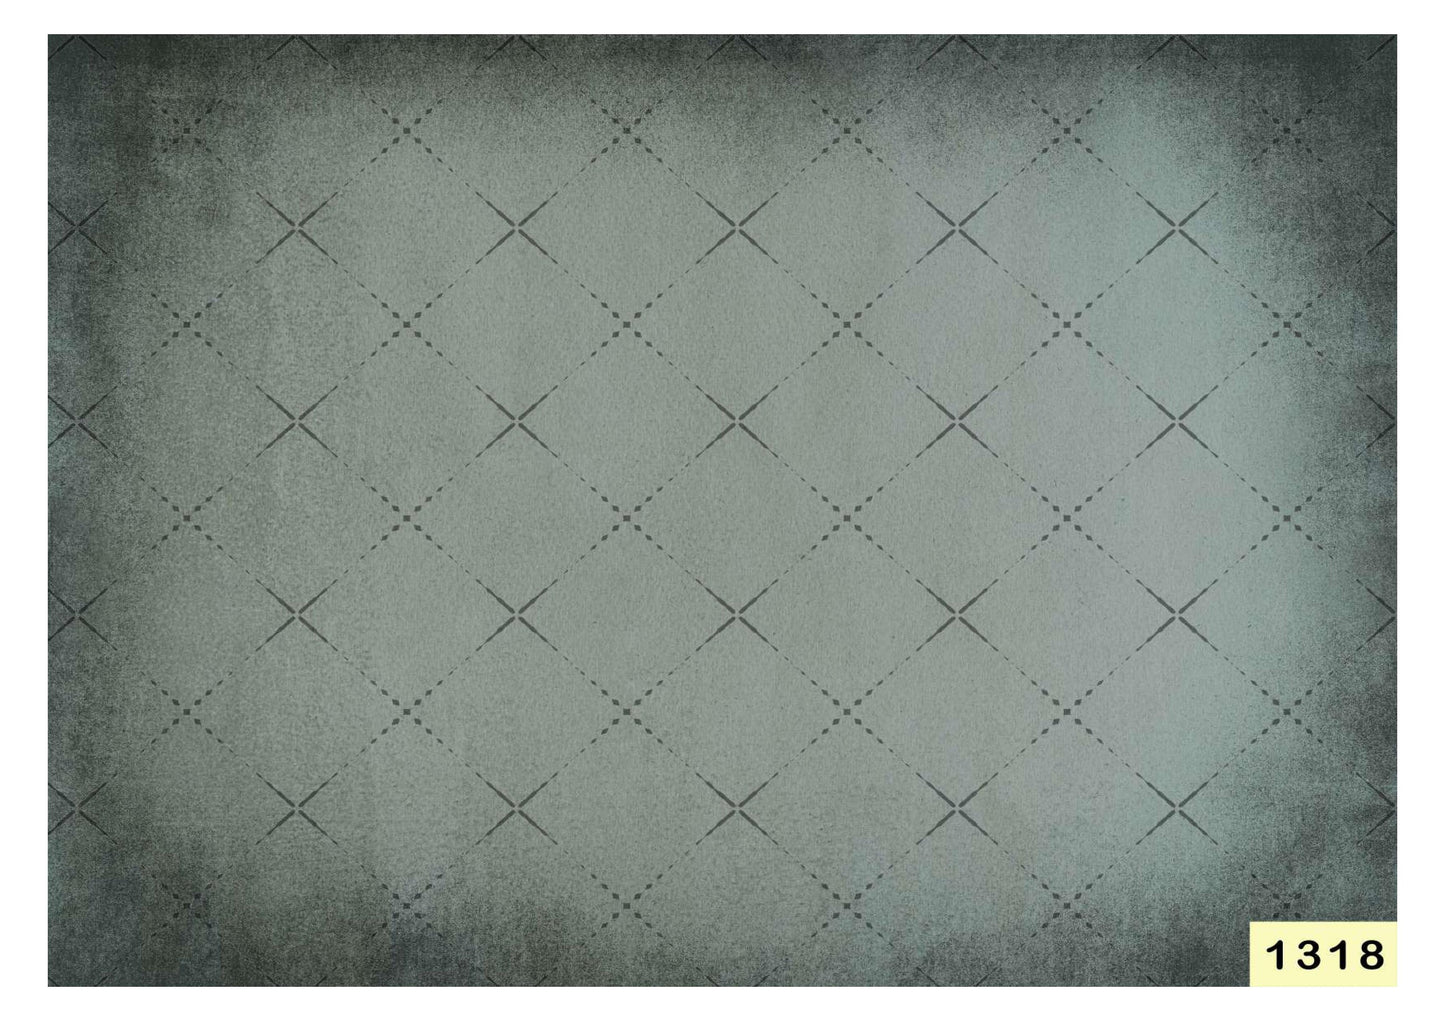 Fabric Backdrop-Gray Texture Backdrop